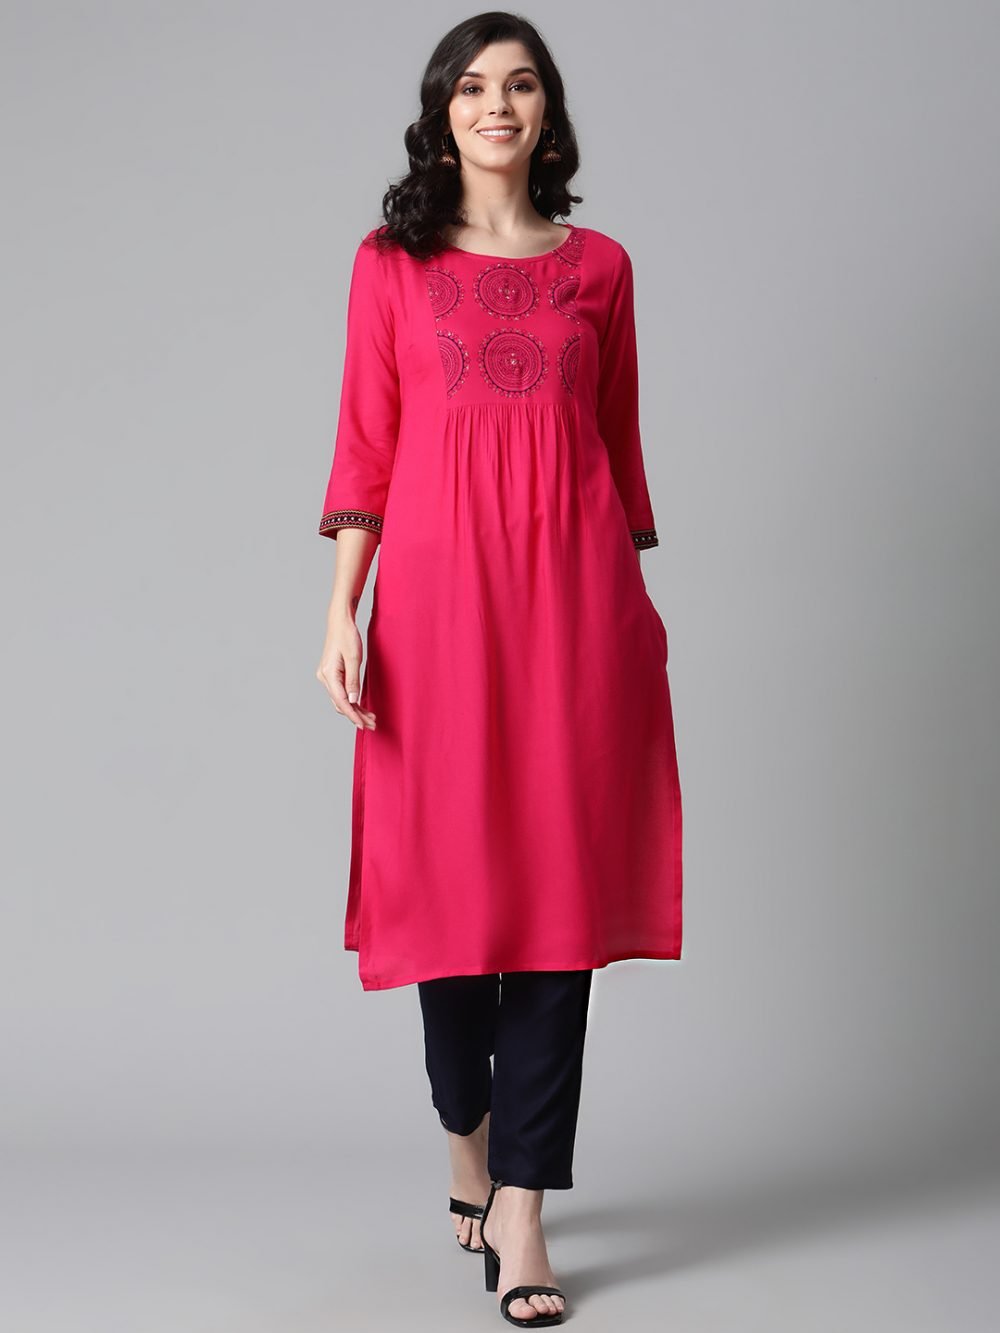 Buy Chacha's Women's Block Print Cotton Kurti & Solid Palazzo Pant |  Stylish Gota Detailing Readymade Straight Salwar Suit | Fully Stitched Kurti -Trouser Set for Ladies - Yellow (Medium) at Amazon.in